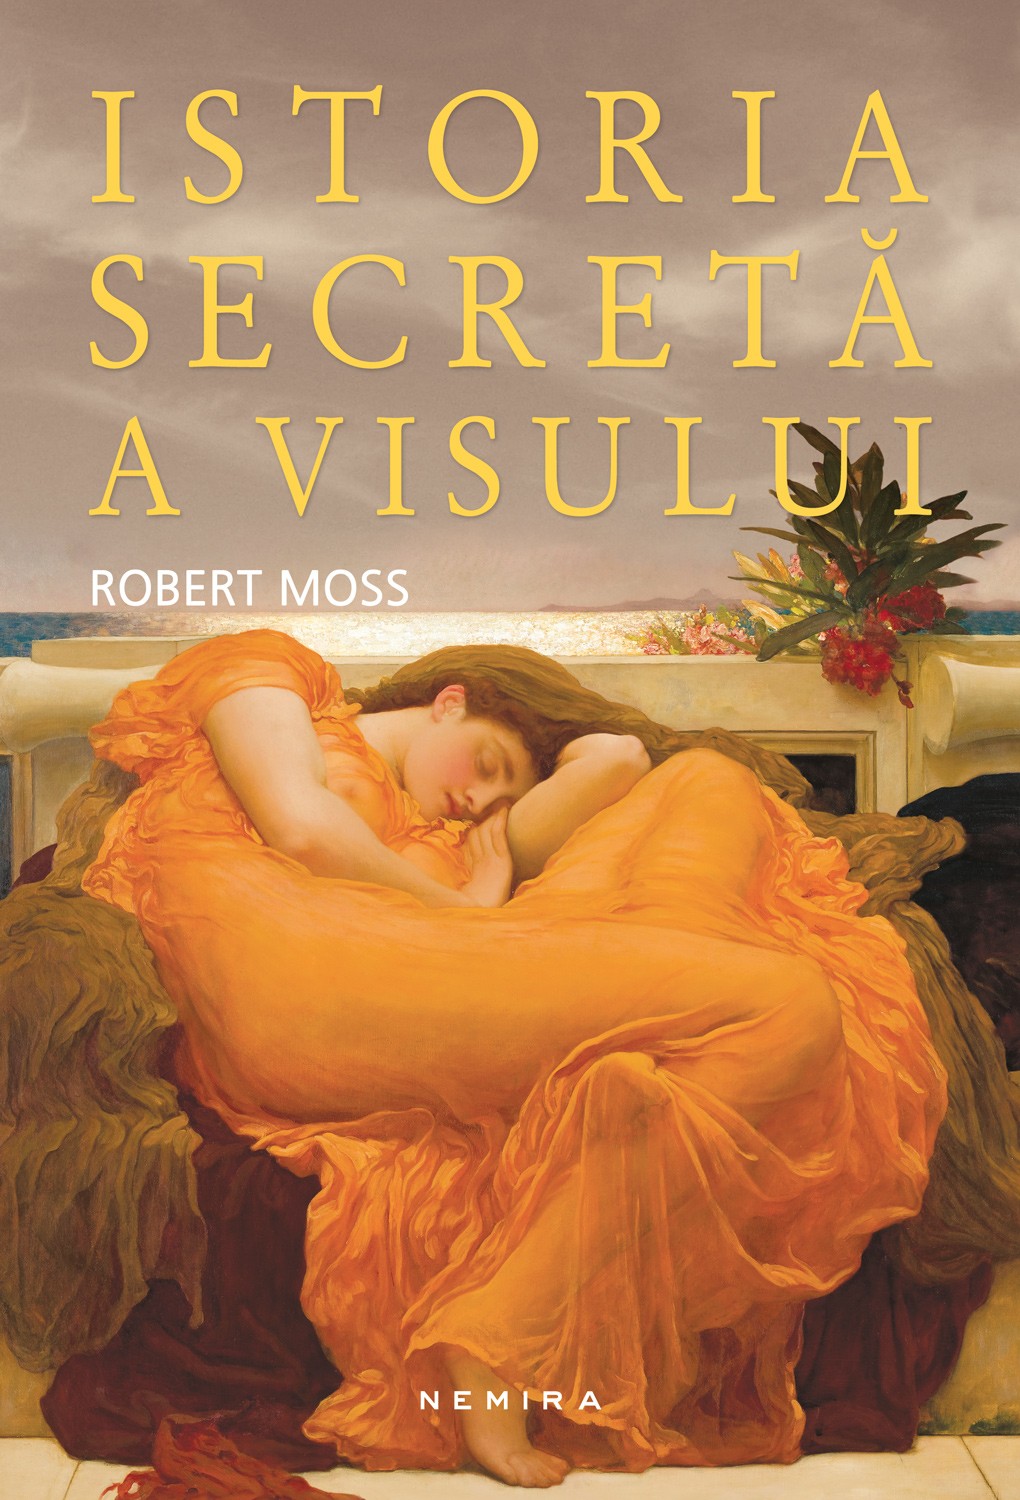 Istoria secreta a visului | Robert Moss carturesti.ro poza bestsellers.ro